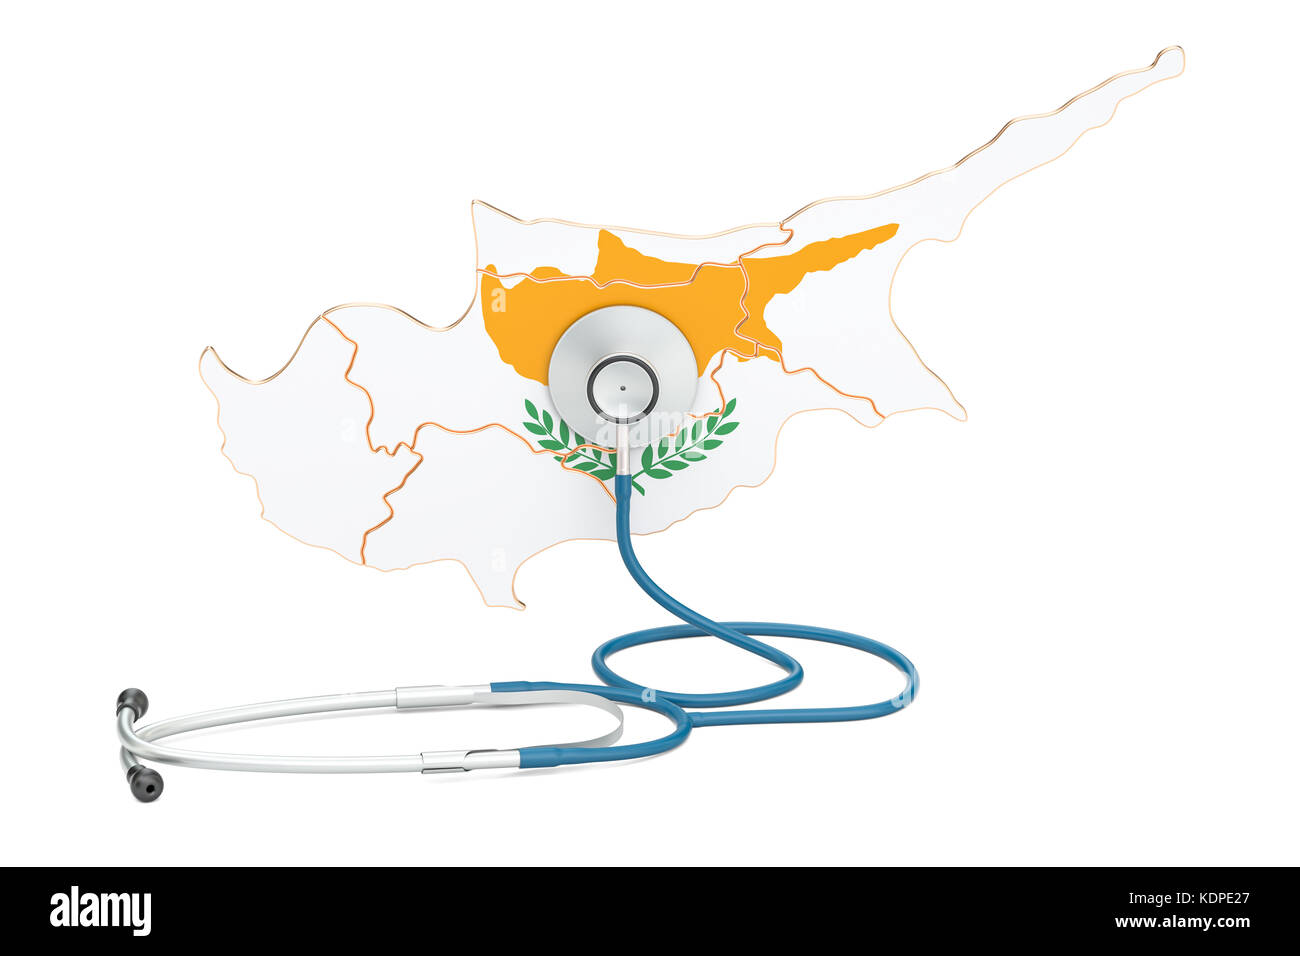 Zypern Karte mit Stethoskop, national Health Care Concept, 3D-Rendering Stockfoto